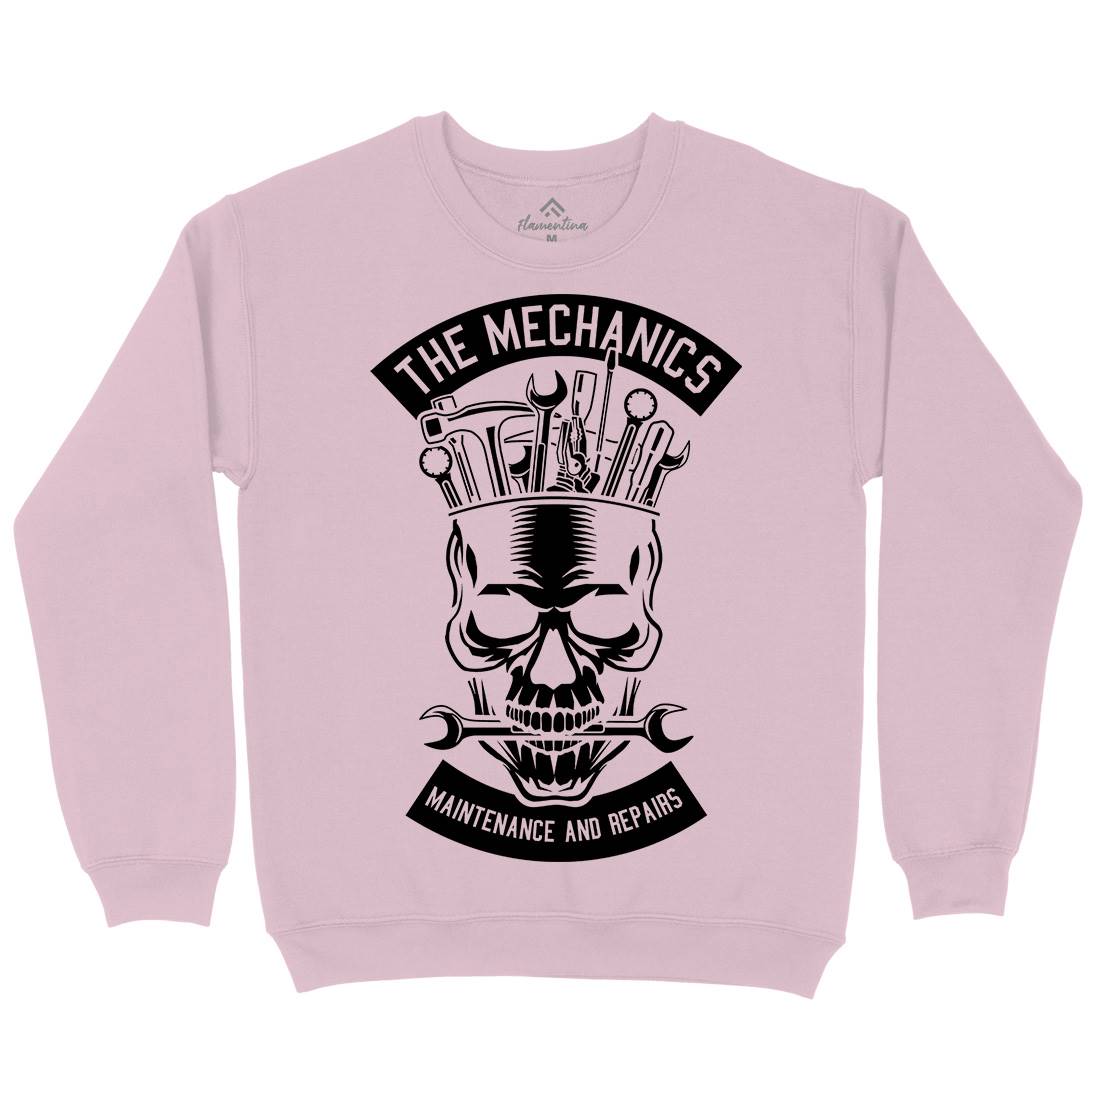 The Mechanics Kids Crew Neck Sweatshirt Retro B653